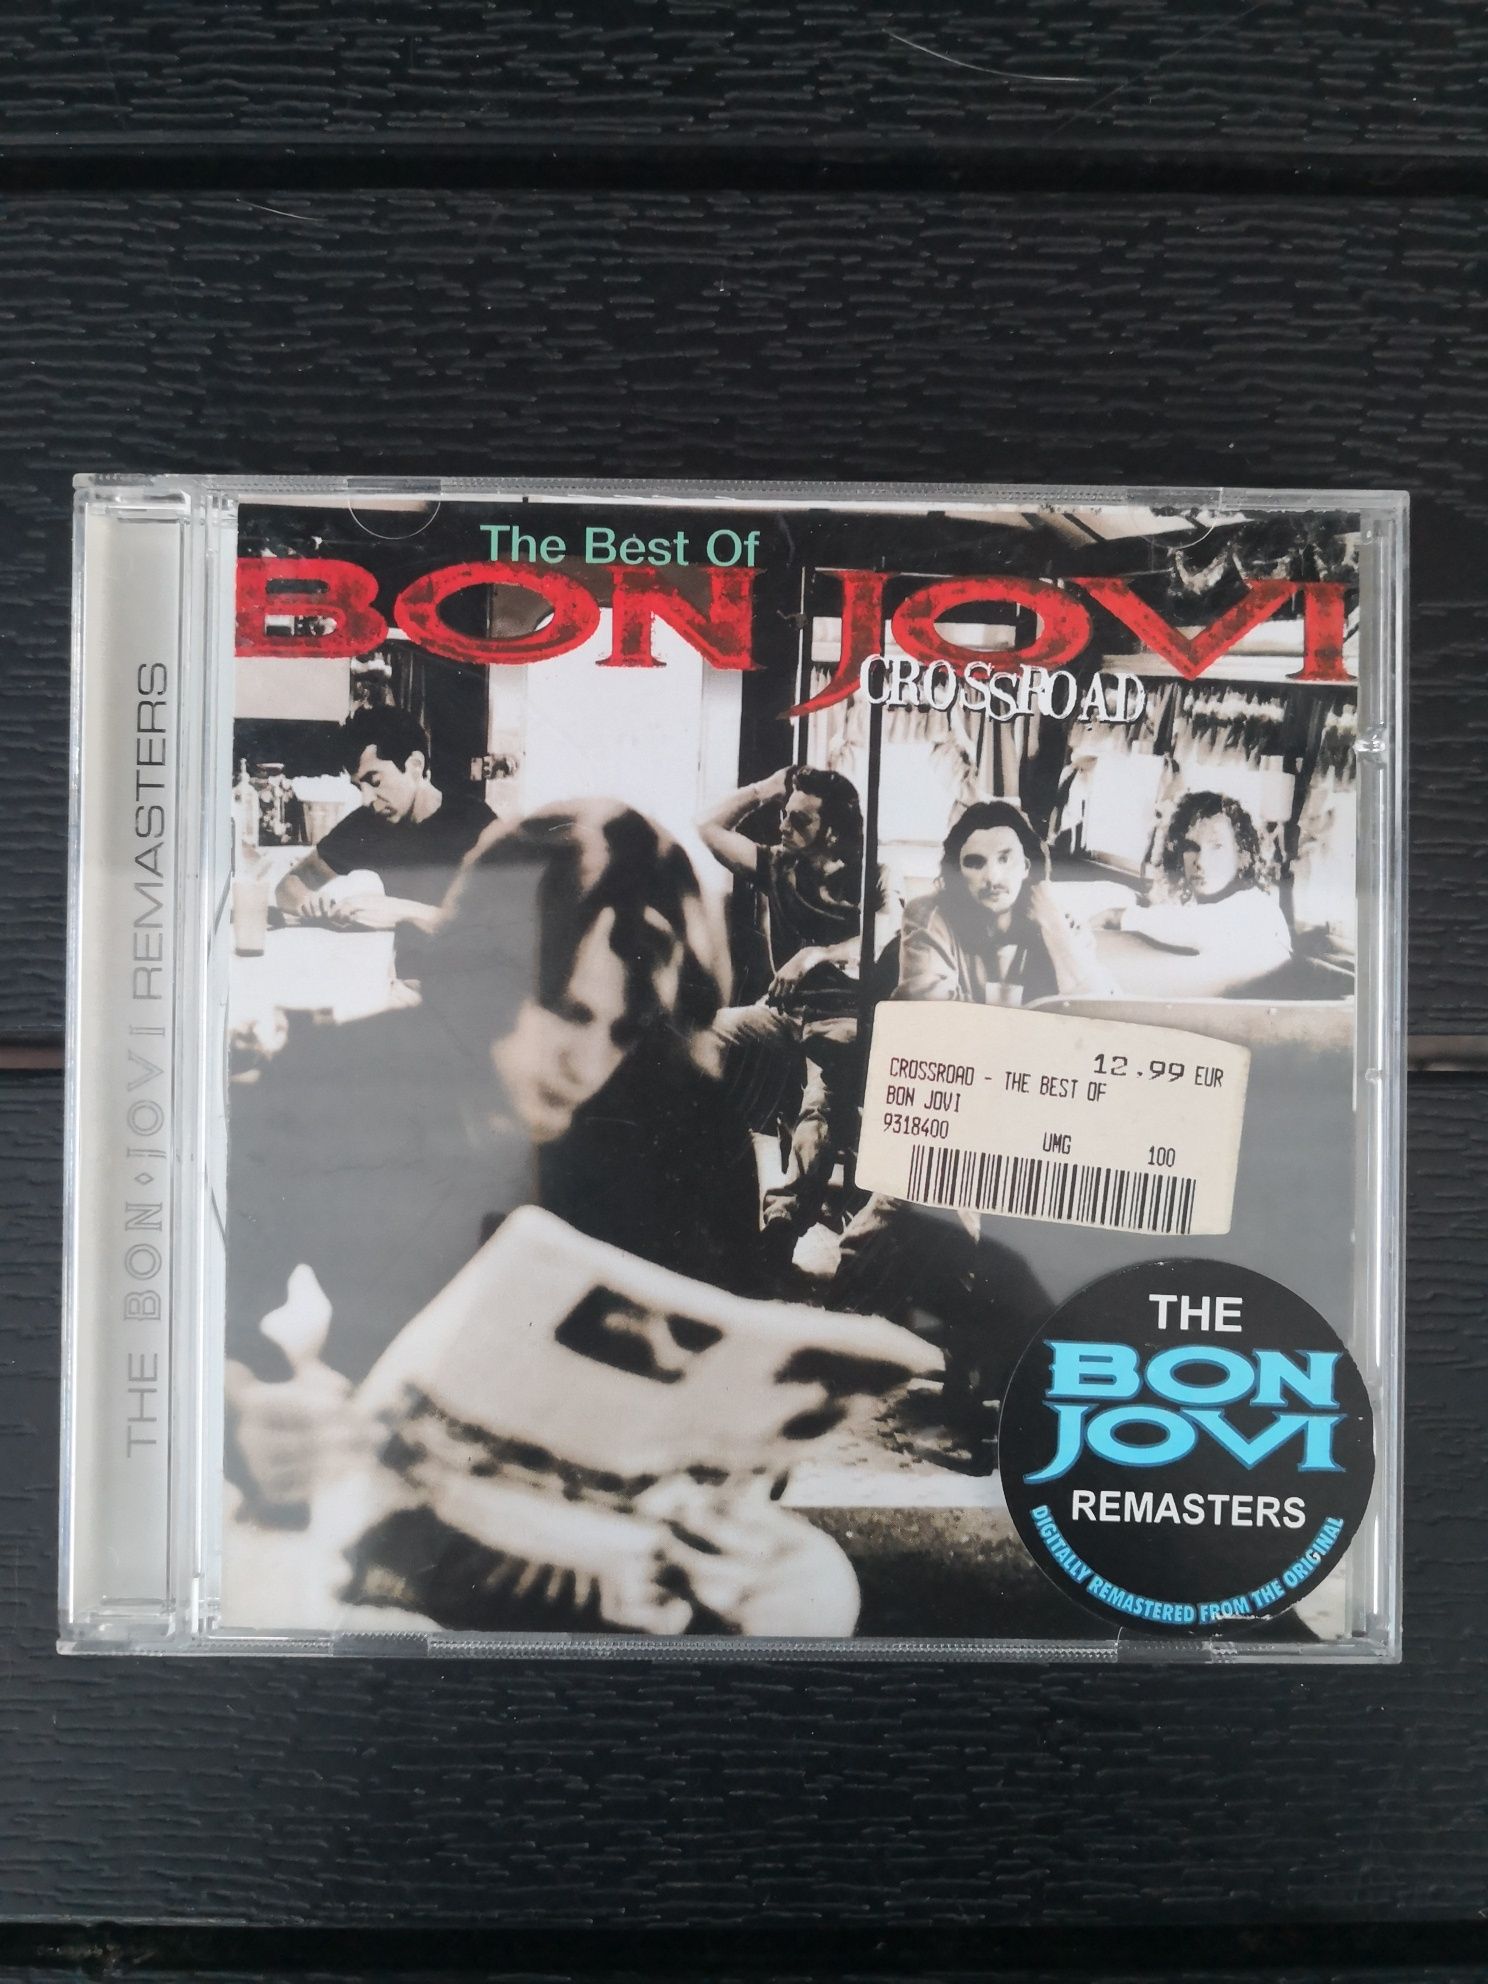 Bon Jovi - 2 x cd, Crush, Cross Road, The Best Of remasters